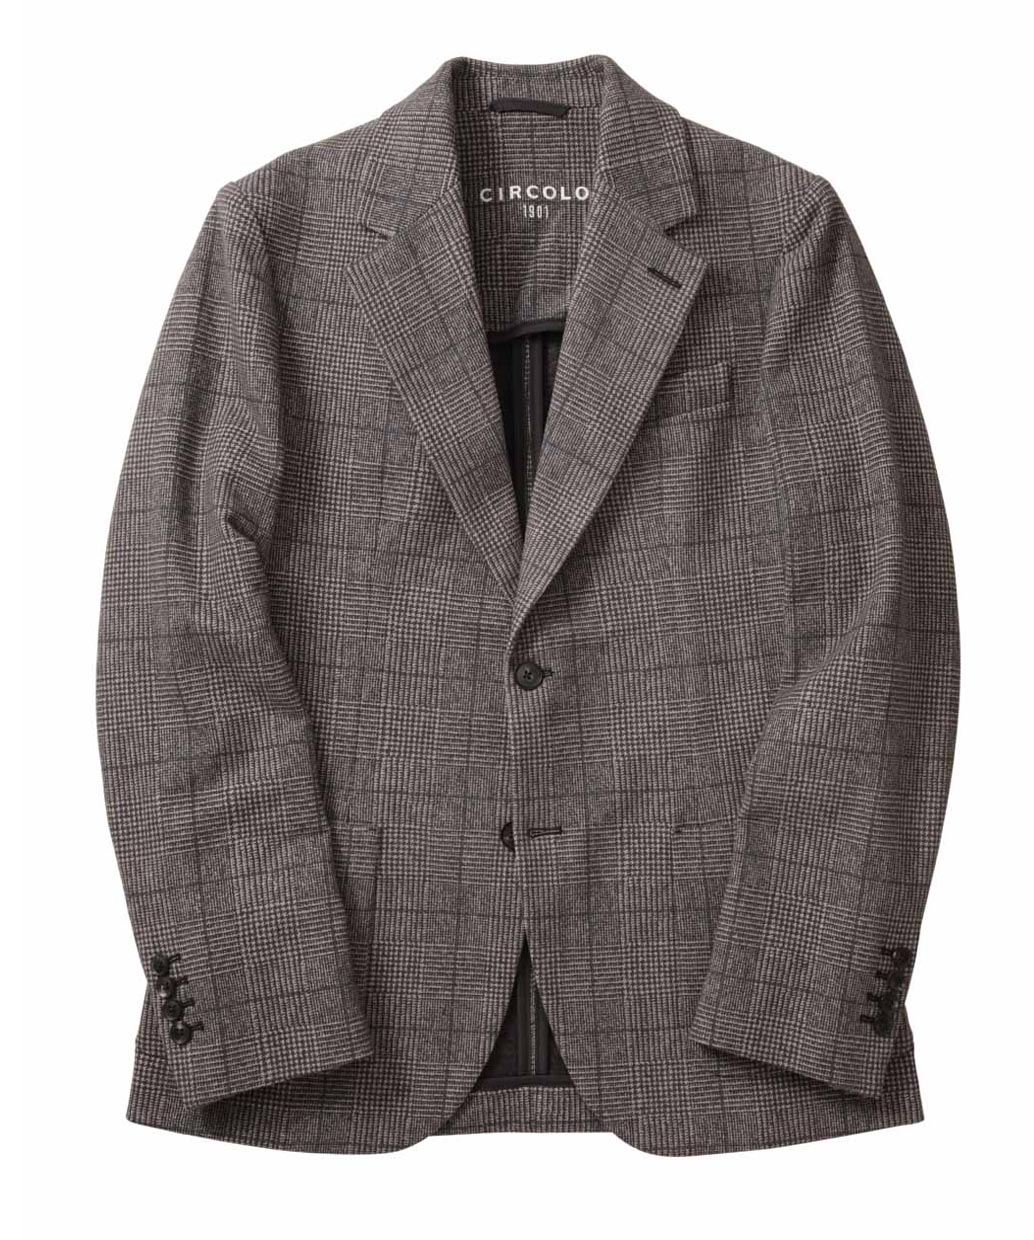 CIRCOLO 1901〈チルコロ 1901〉Men'sのジャケット【LEON12月号掲載】